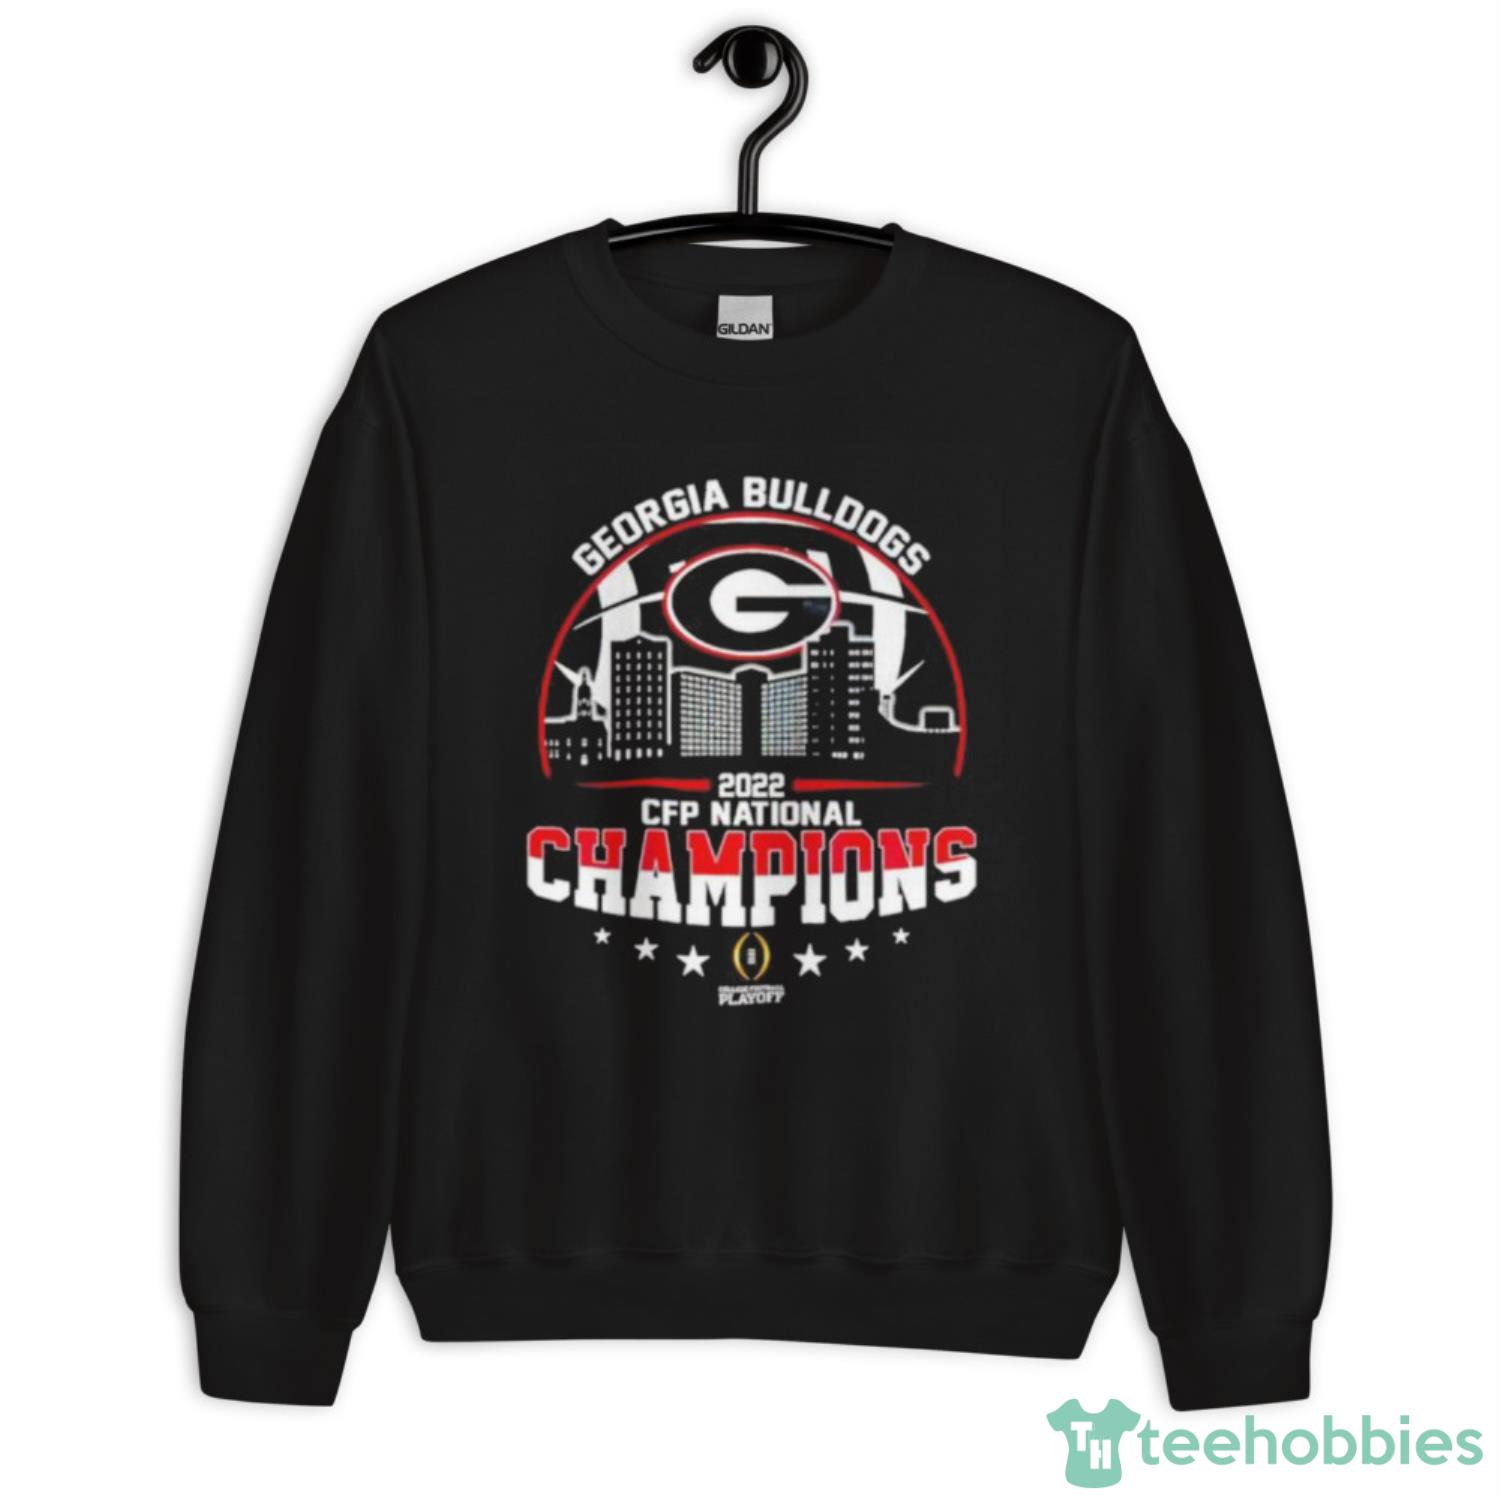 2022 CFP National Champions Georgia Bulldogs League Collegiate Wear shirt - Unisex Crewneck Sweatshirt